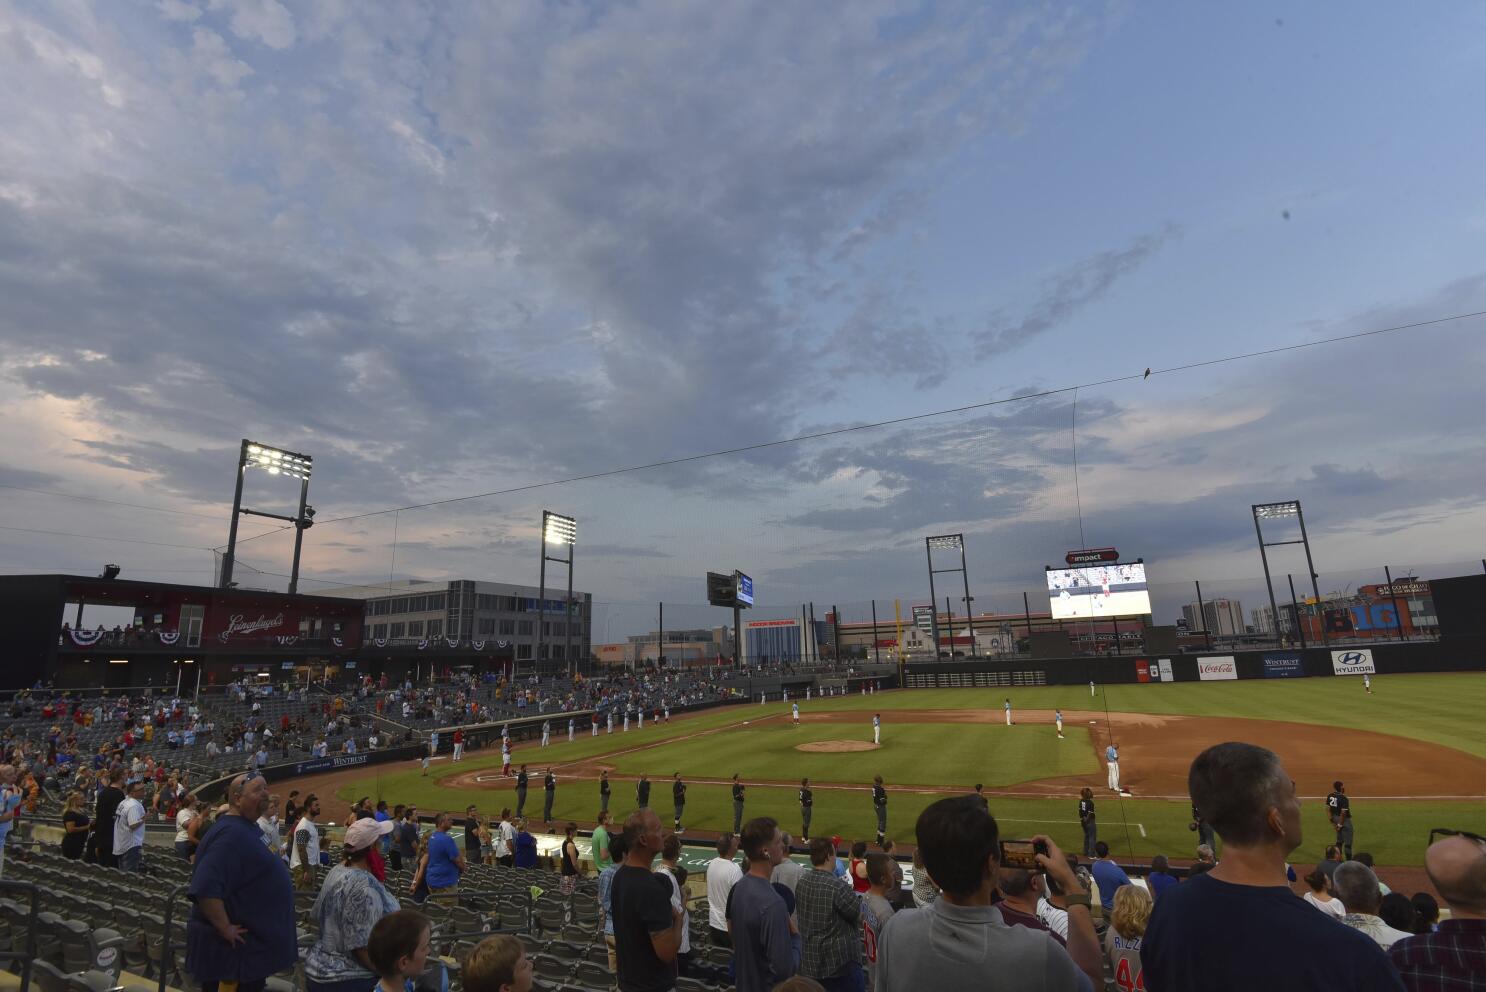 MLB Union Starts Campaign to Organize Minor League Baseball